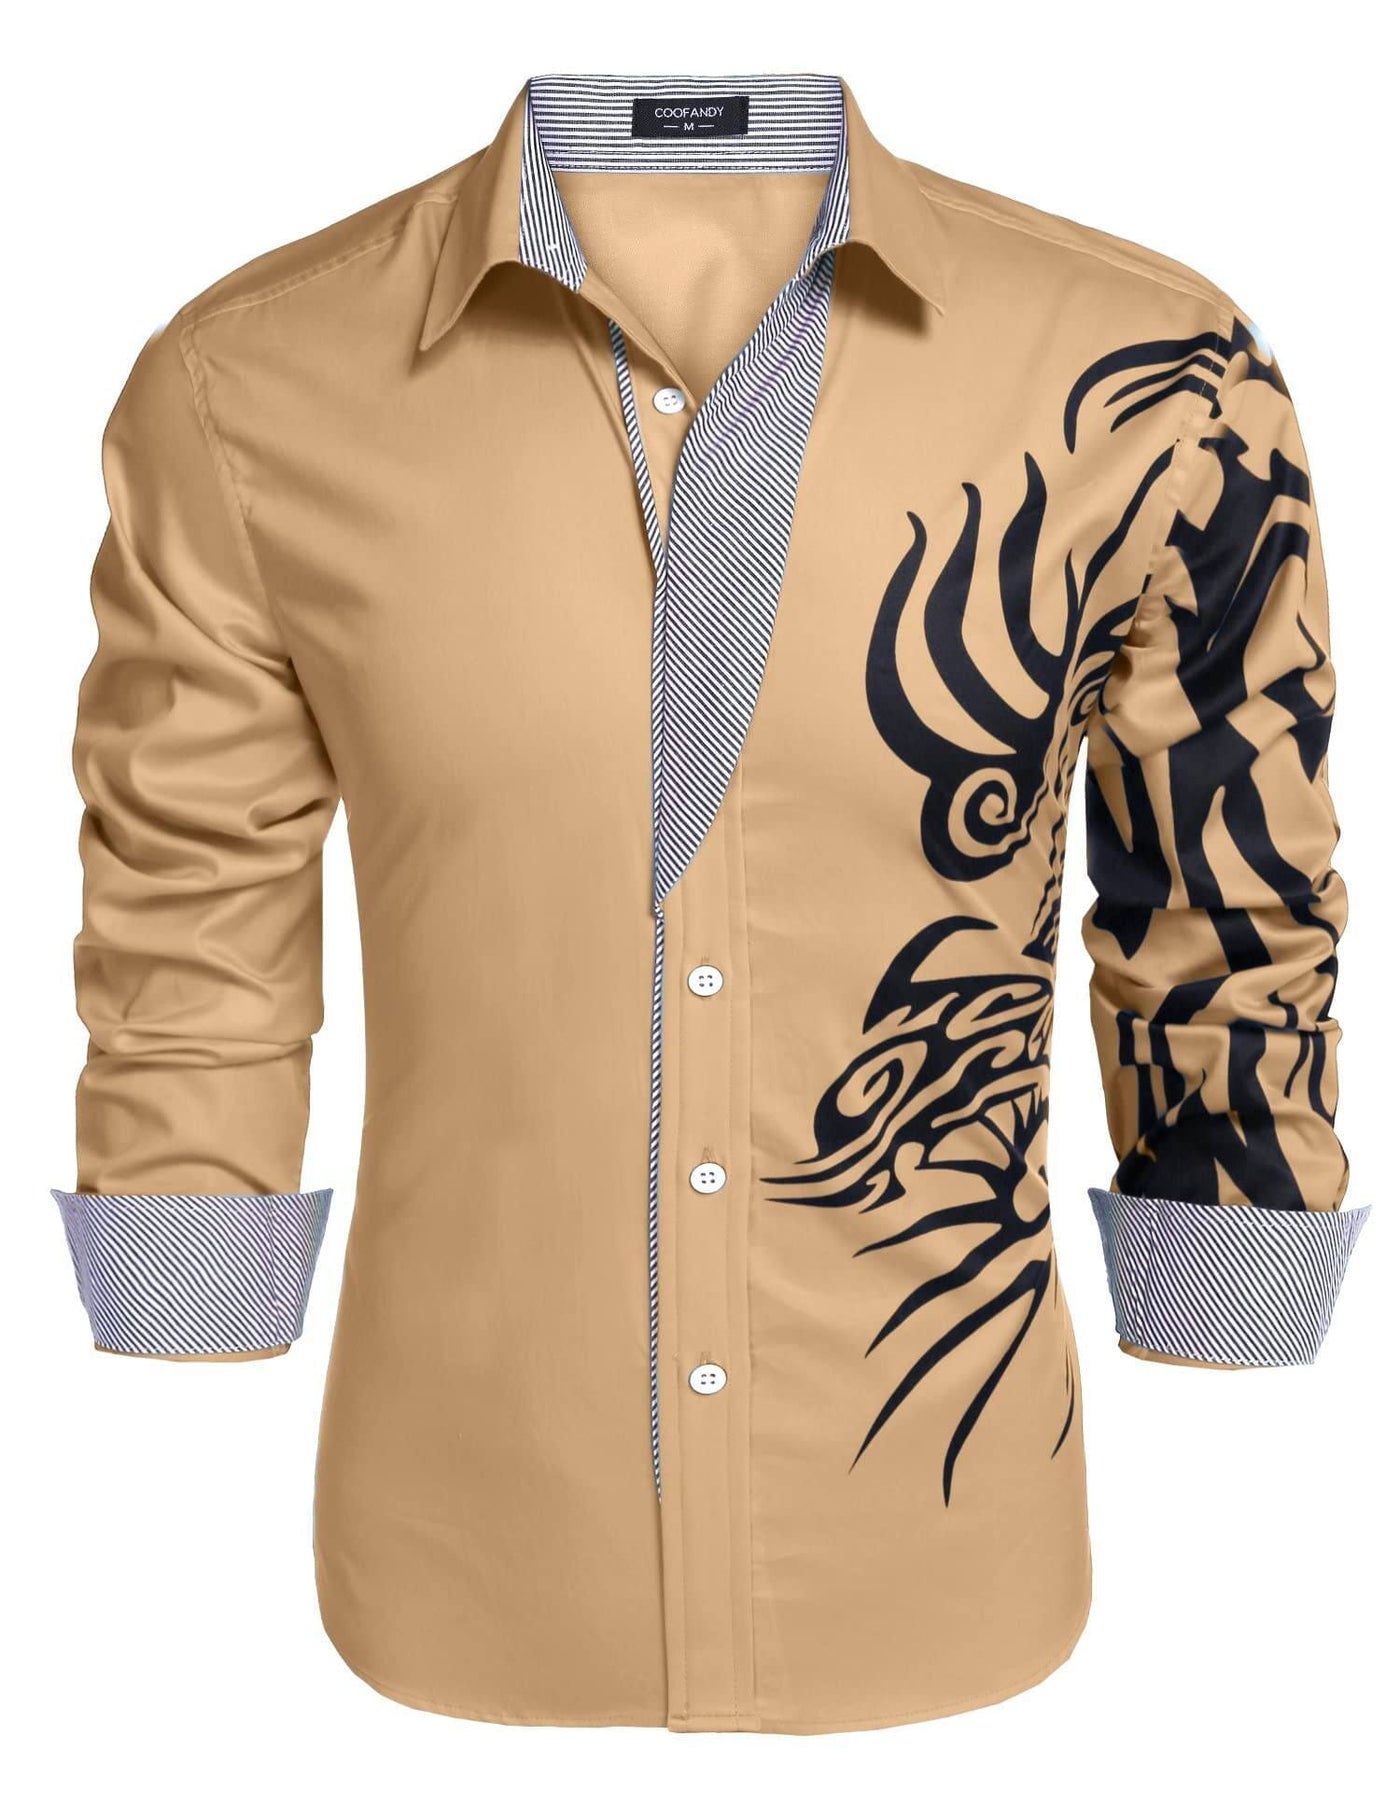 Coofandy Print Dress Shirt (US Only) Shirts coofandy Khaki S 